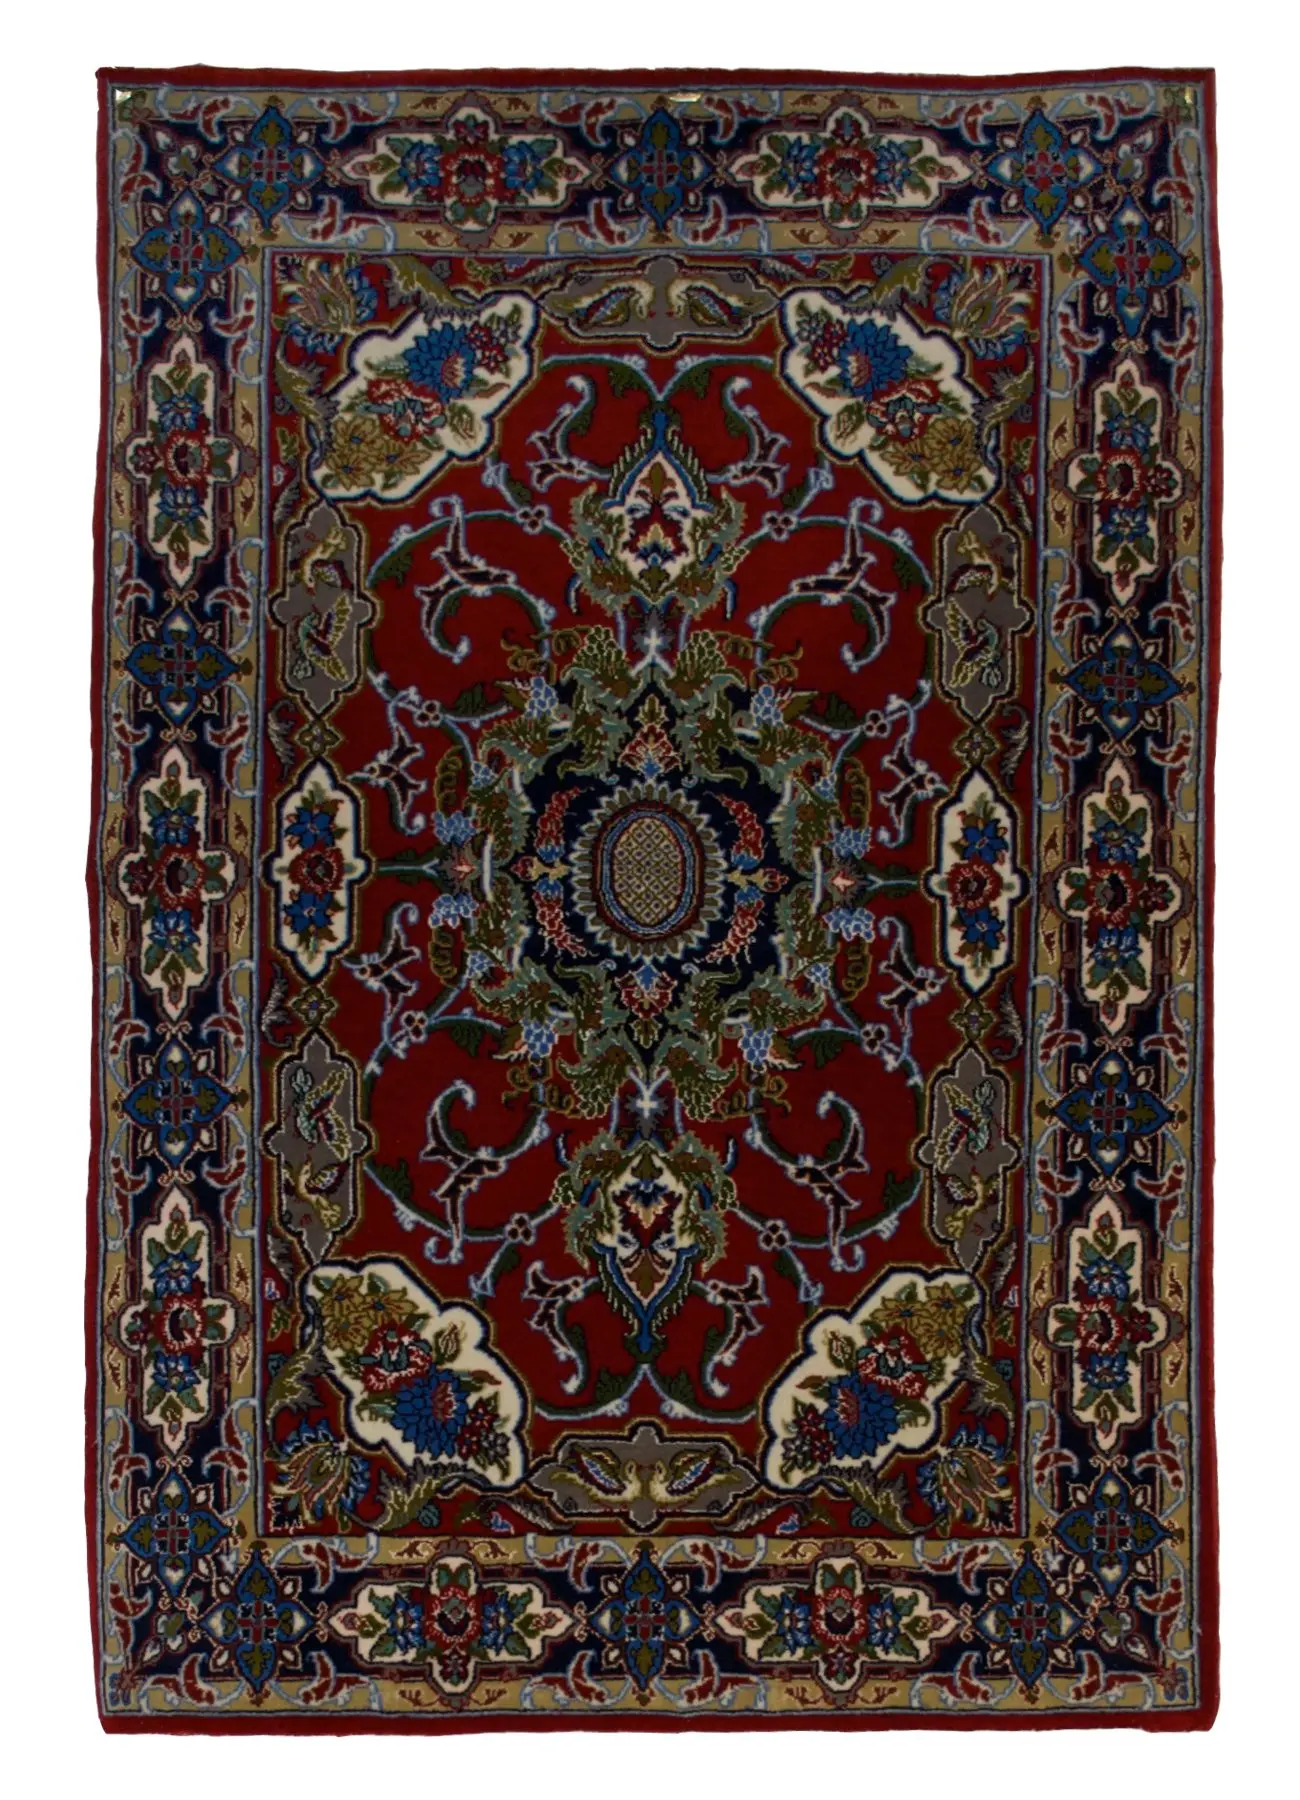 Persian Esfahan rug 2' 4" x 3' 6" Handmade Area Rug - Shabahang Royal Carpet